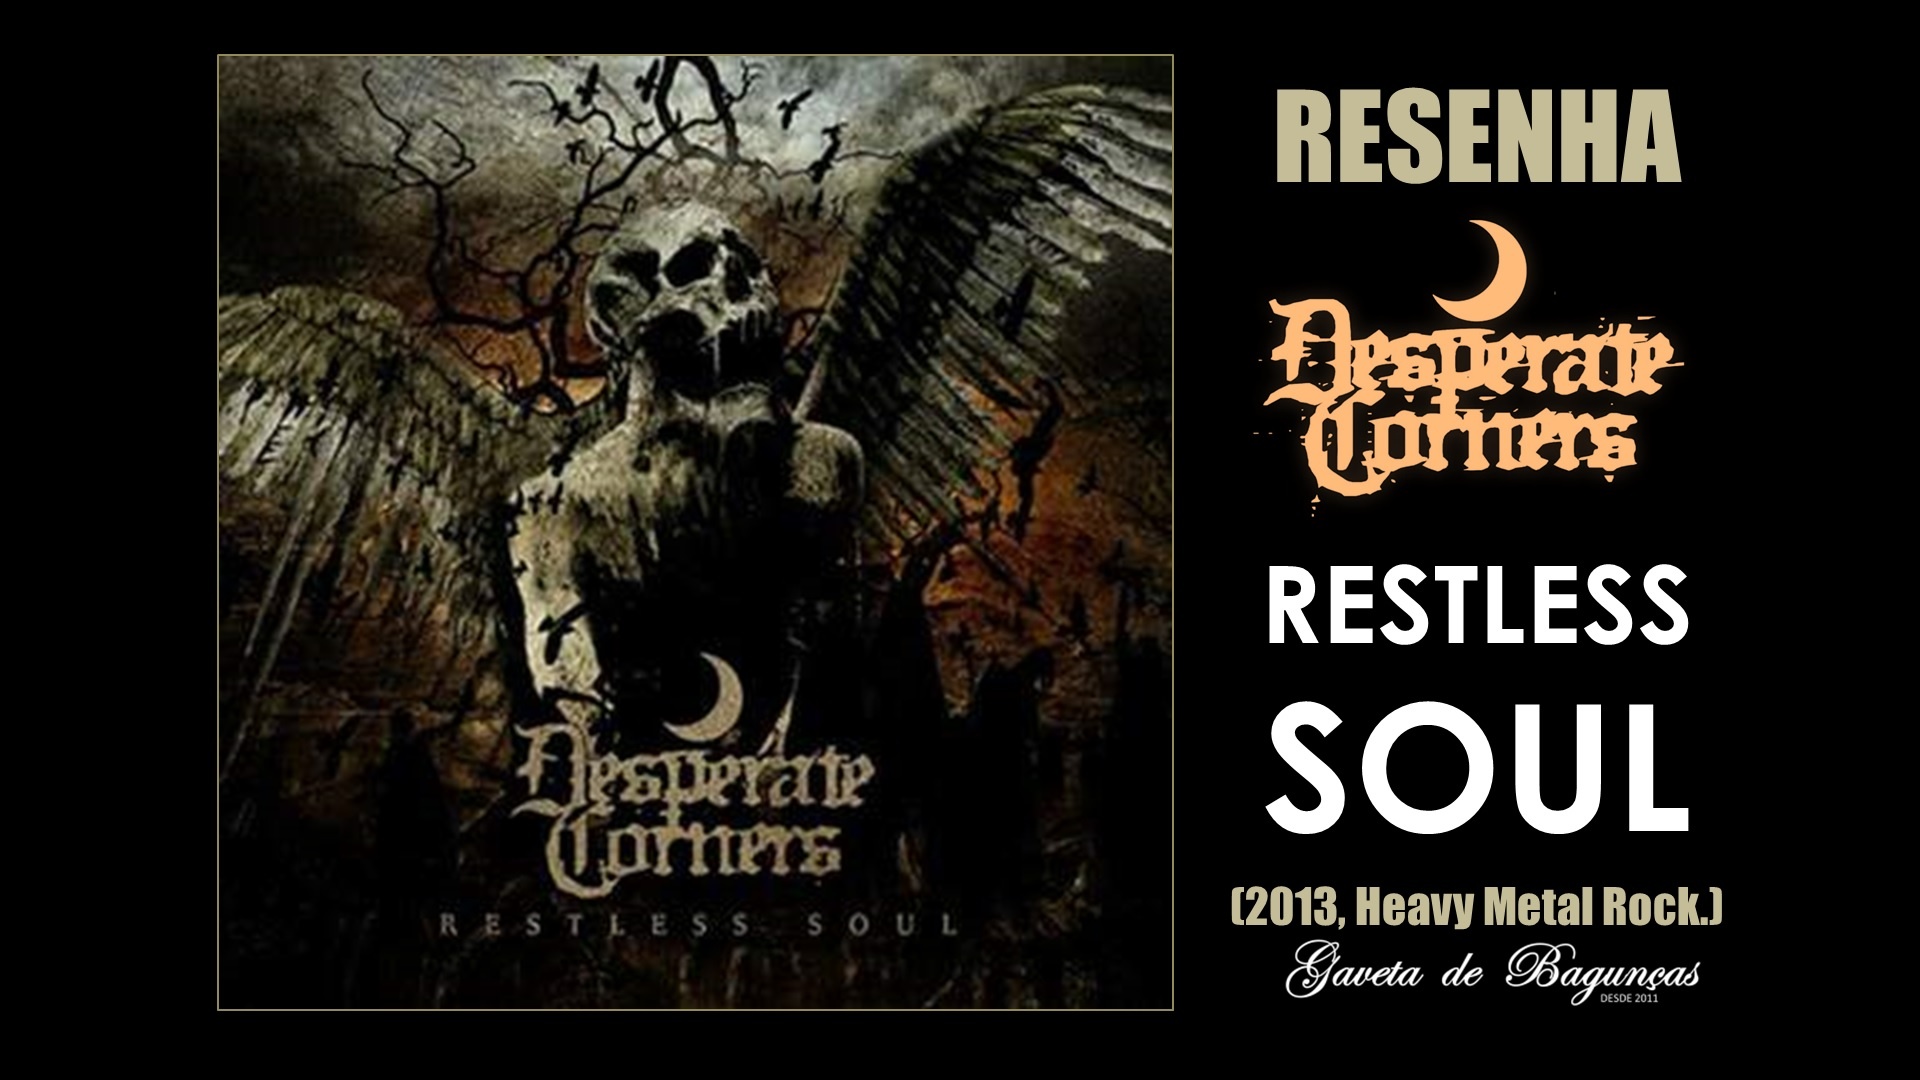 Desperate Corners - Restless Soul (2013, Heavy Metal Rock) Resenha Review Black Doom Metal Nacional